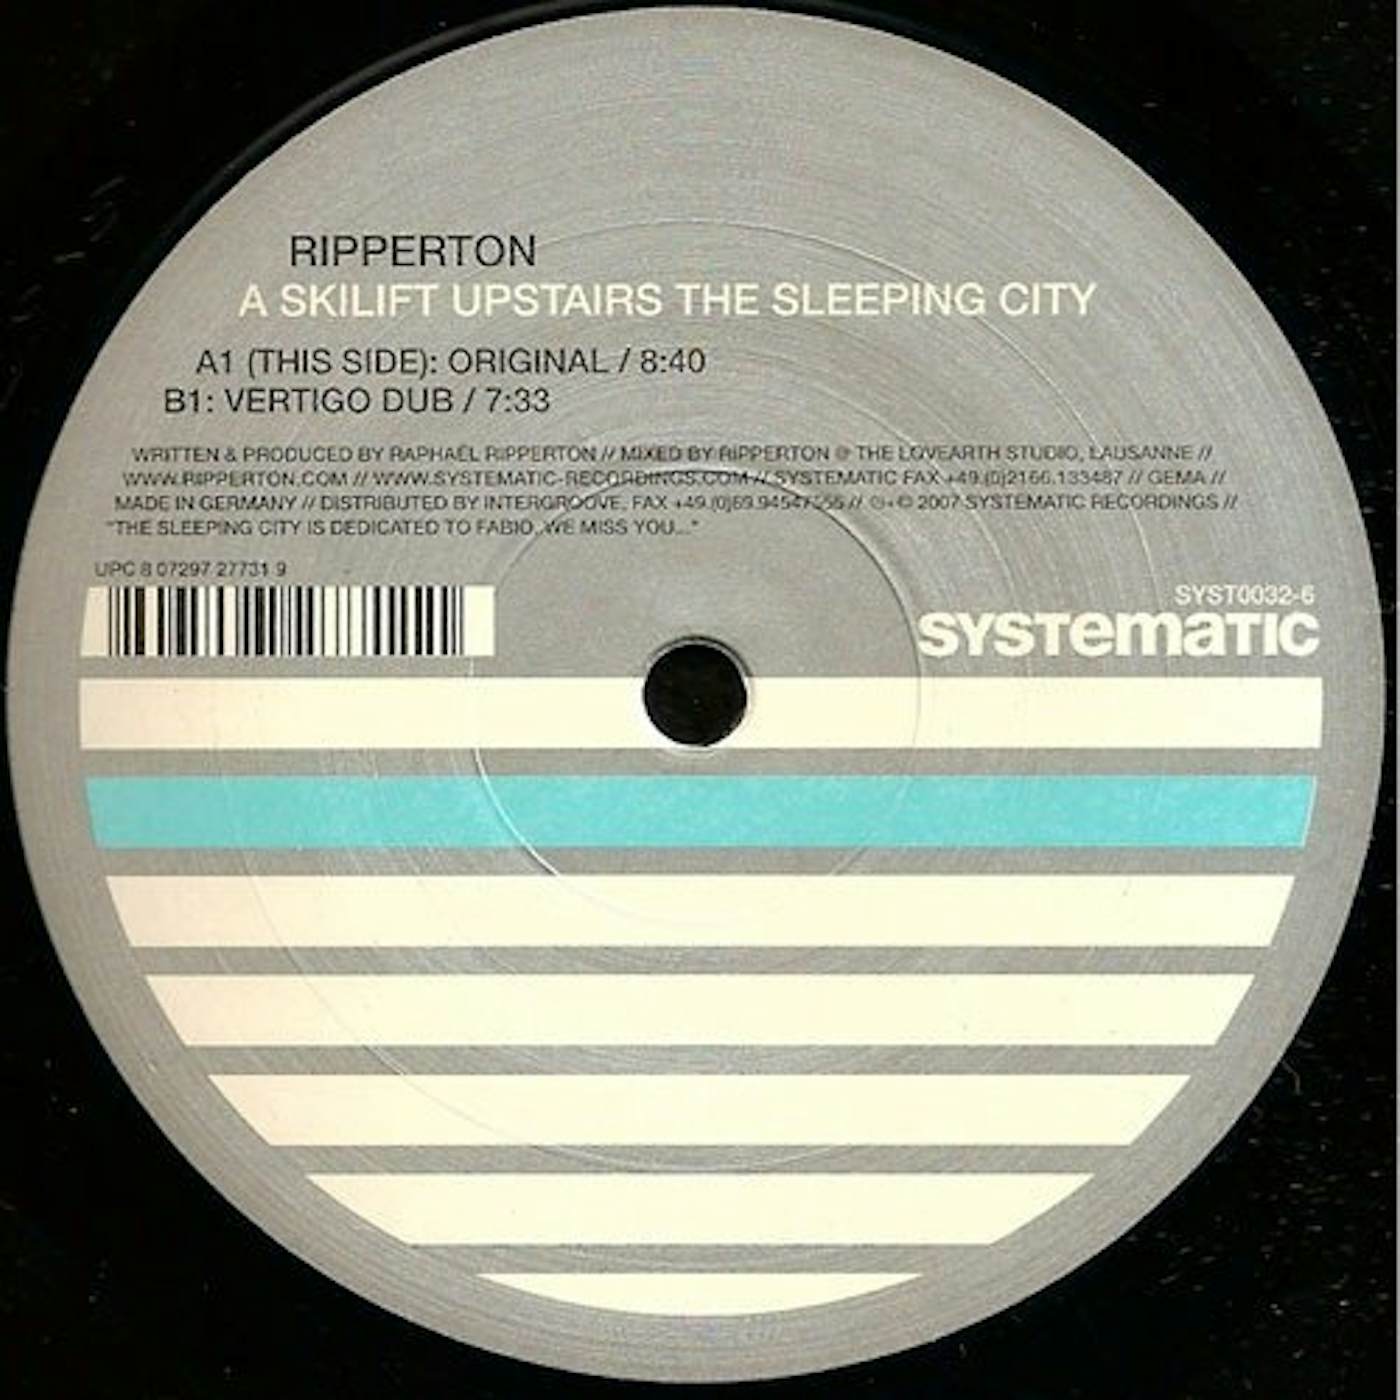 Ripperton SKILIFT UPSTAIR THE SLEEPING CITY Vinyl Record